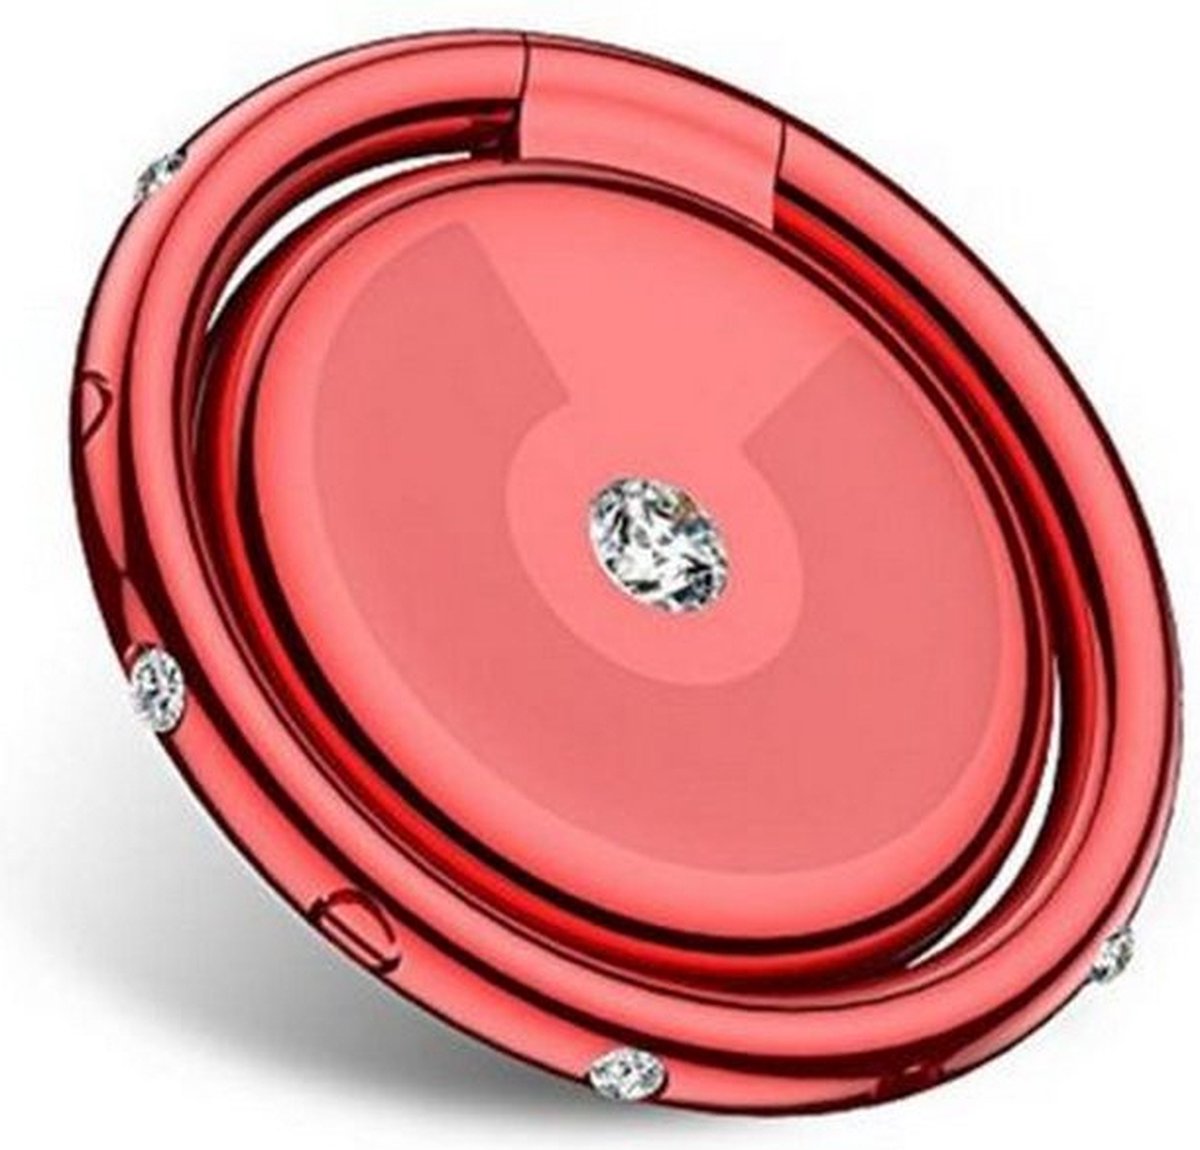 USAMS Diamond Encrusted Ring Holder - Rood